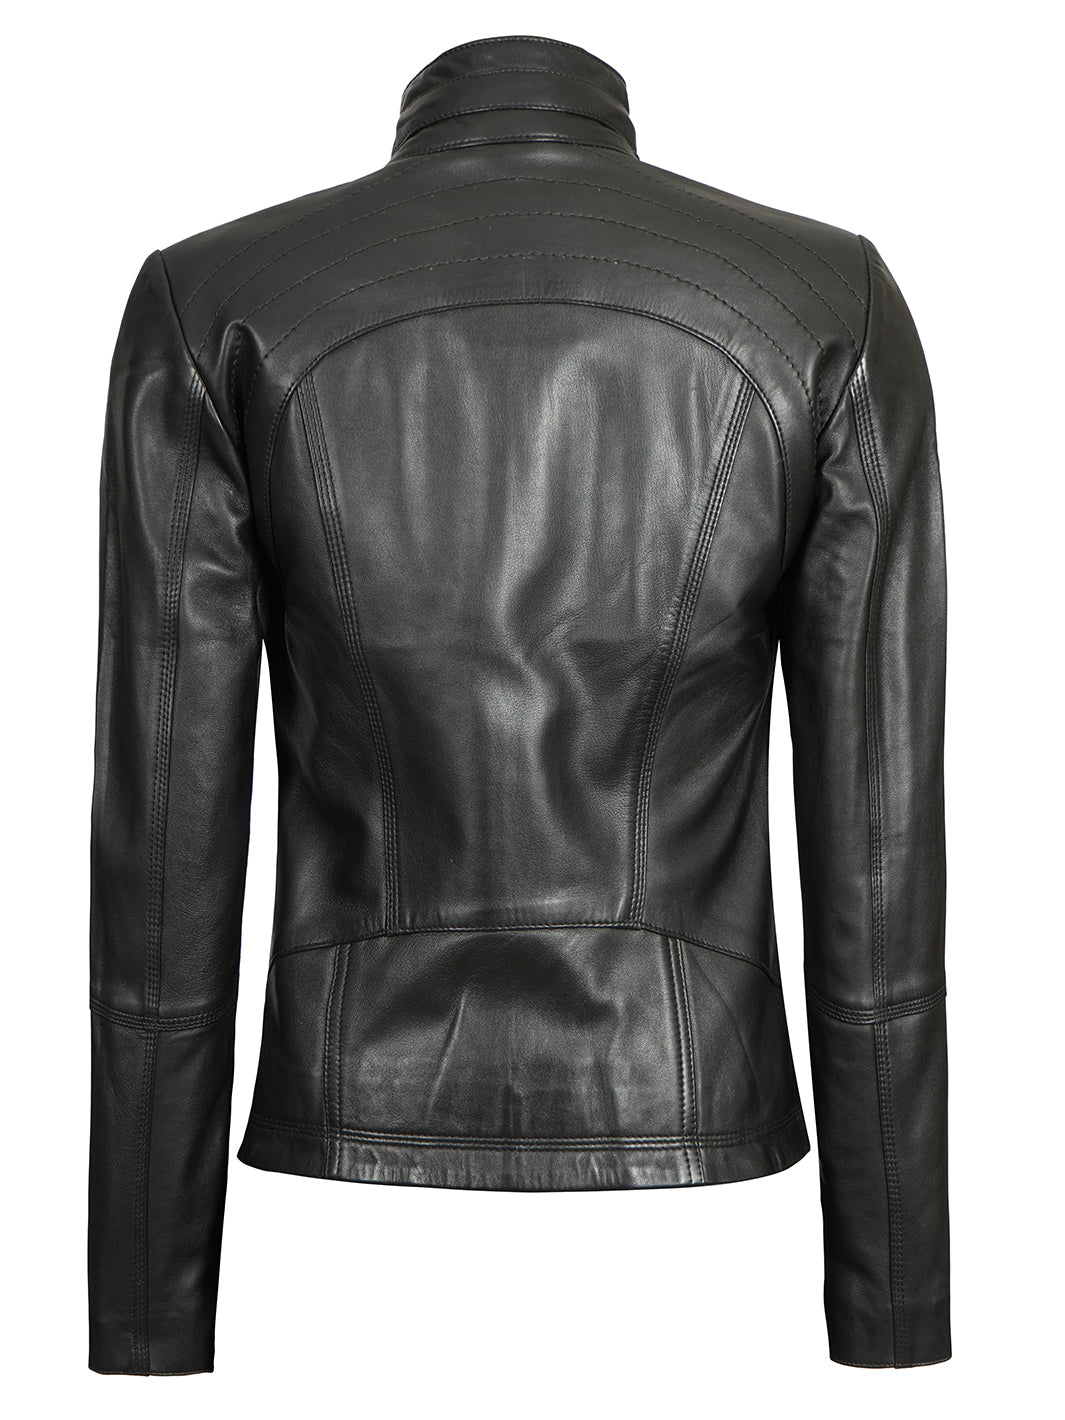 black leather jacket women's